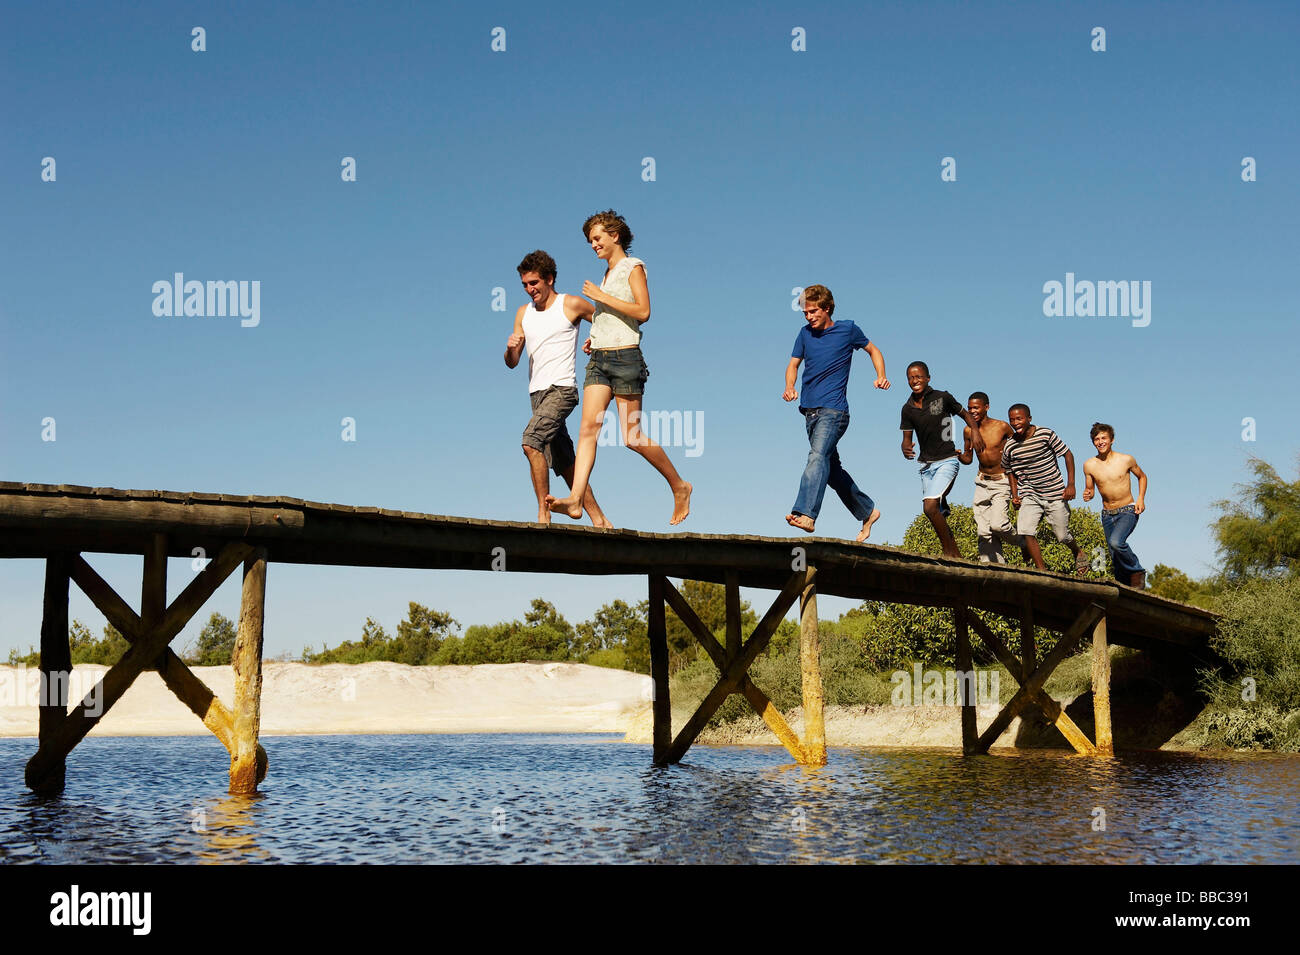 Group of teenagers running across jetty Stock Photo